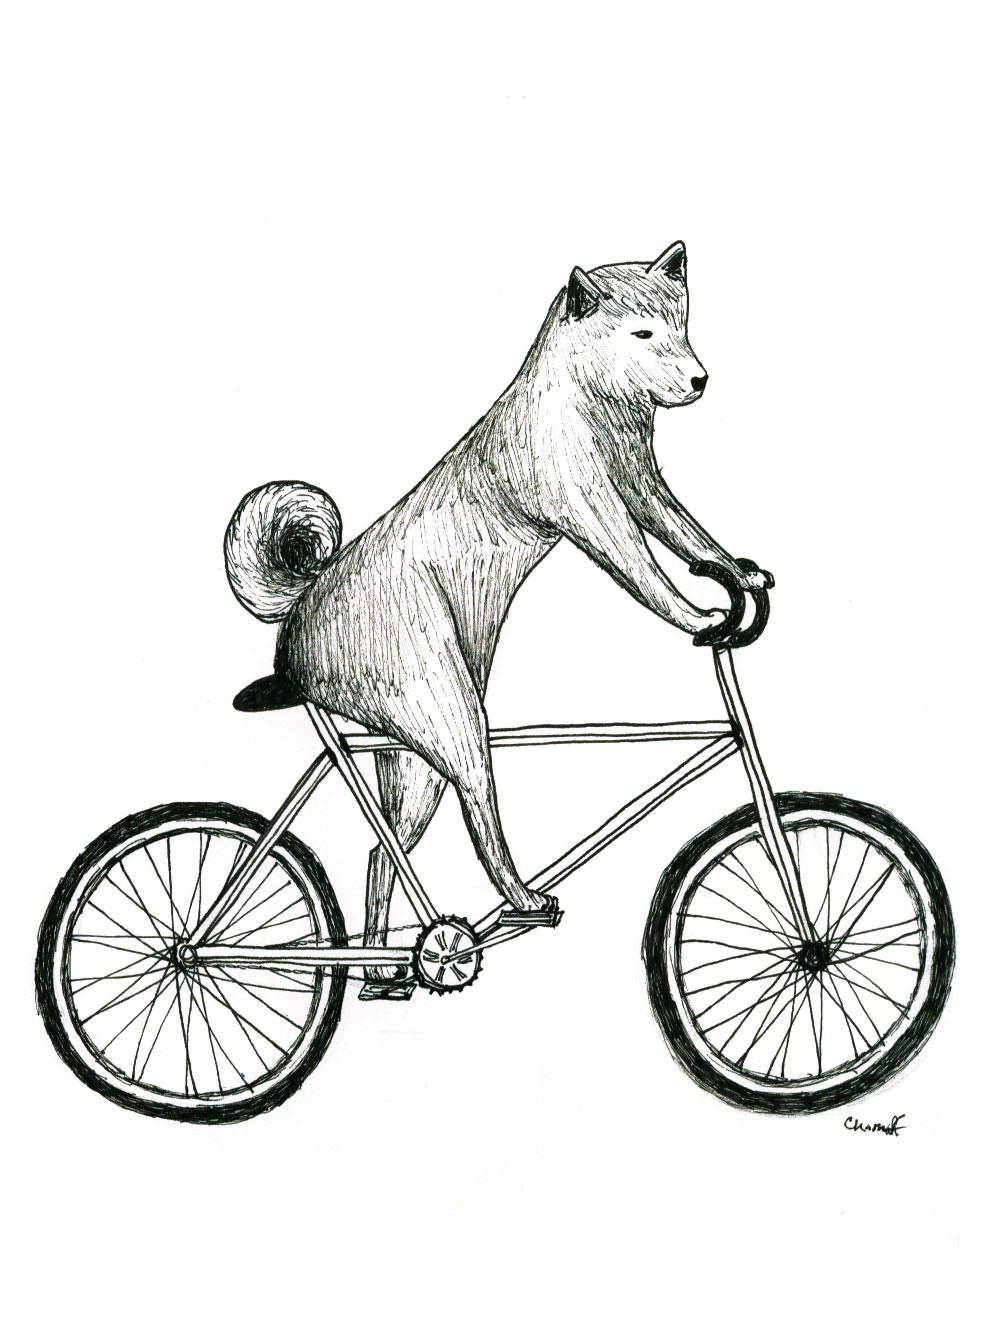 Shiba Inu Dog Riding a Bicycle Print - itllglowonyou